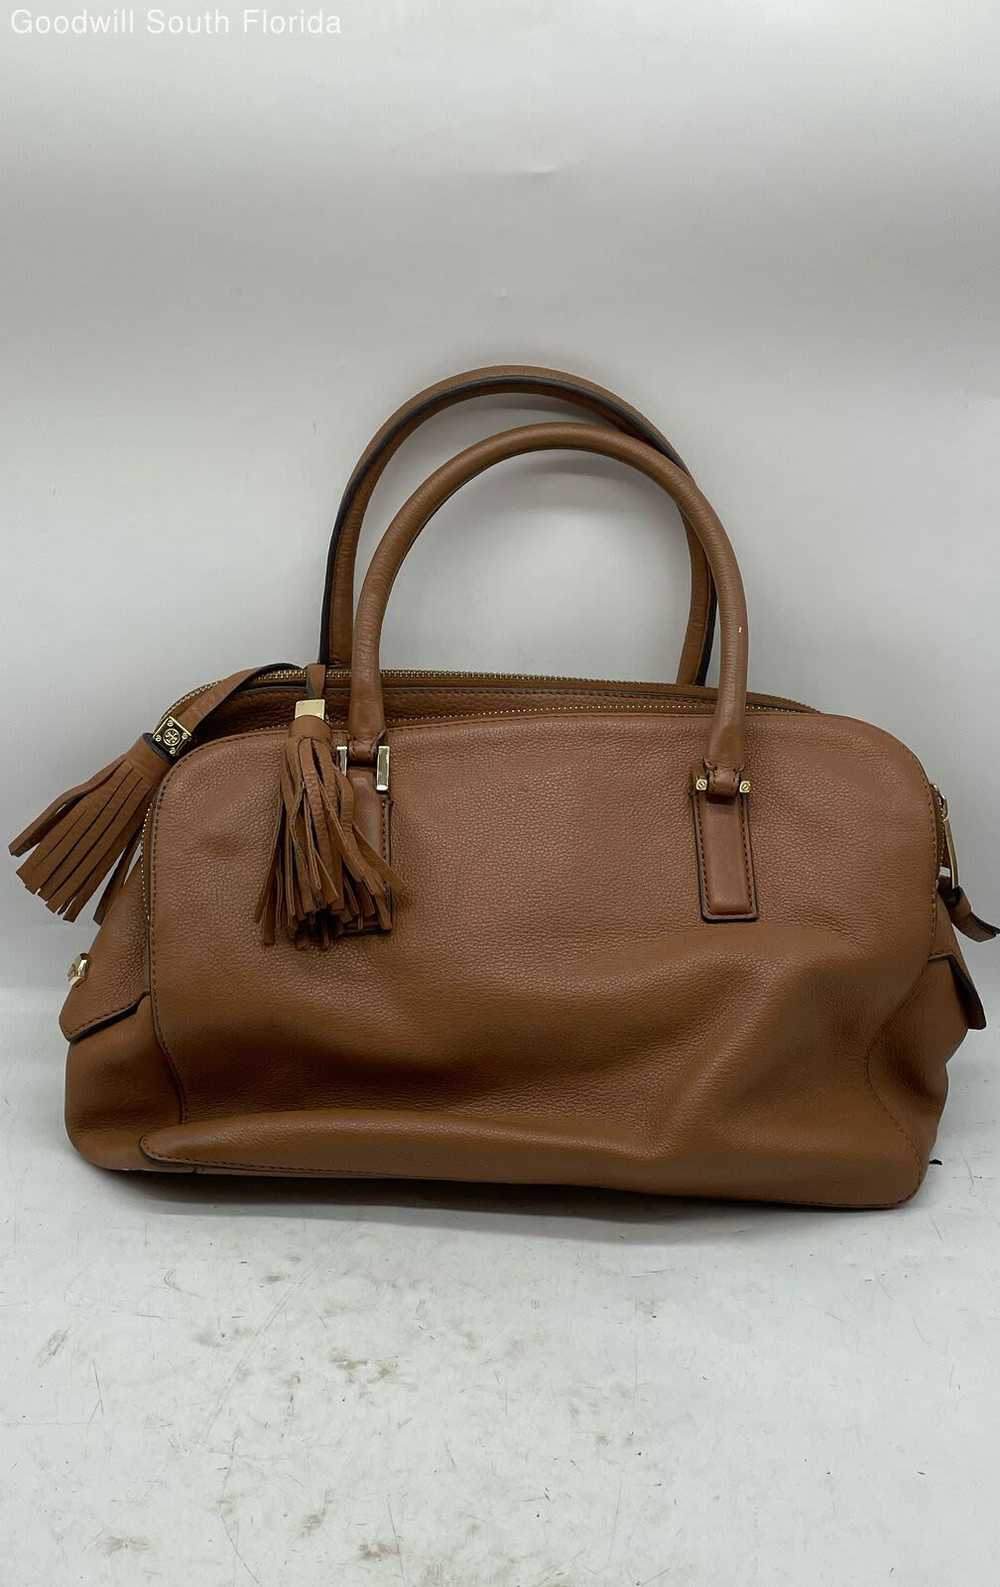 Tory Burch Brown Handbag Shoulder Bag - image 2